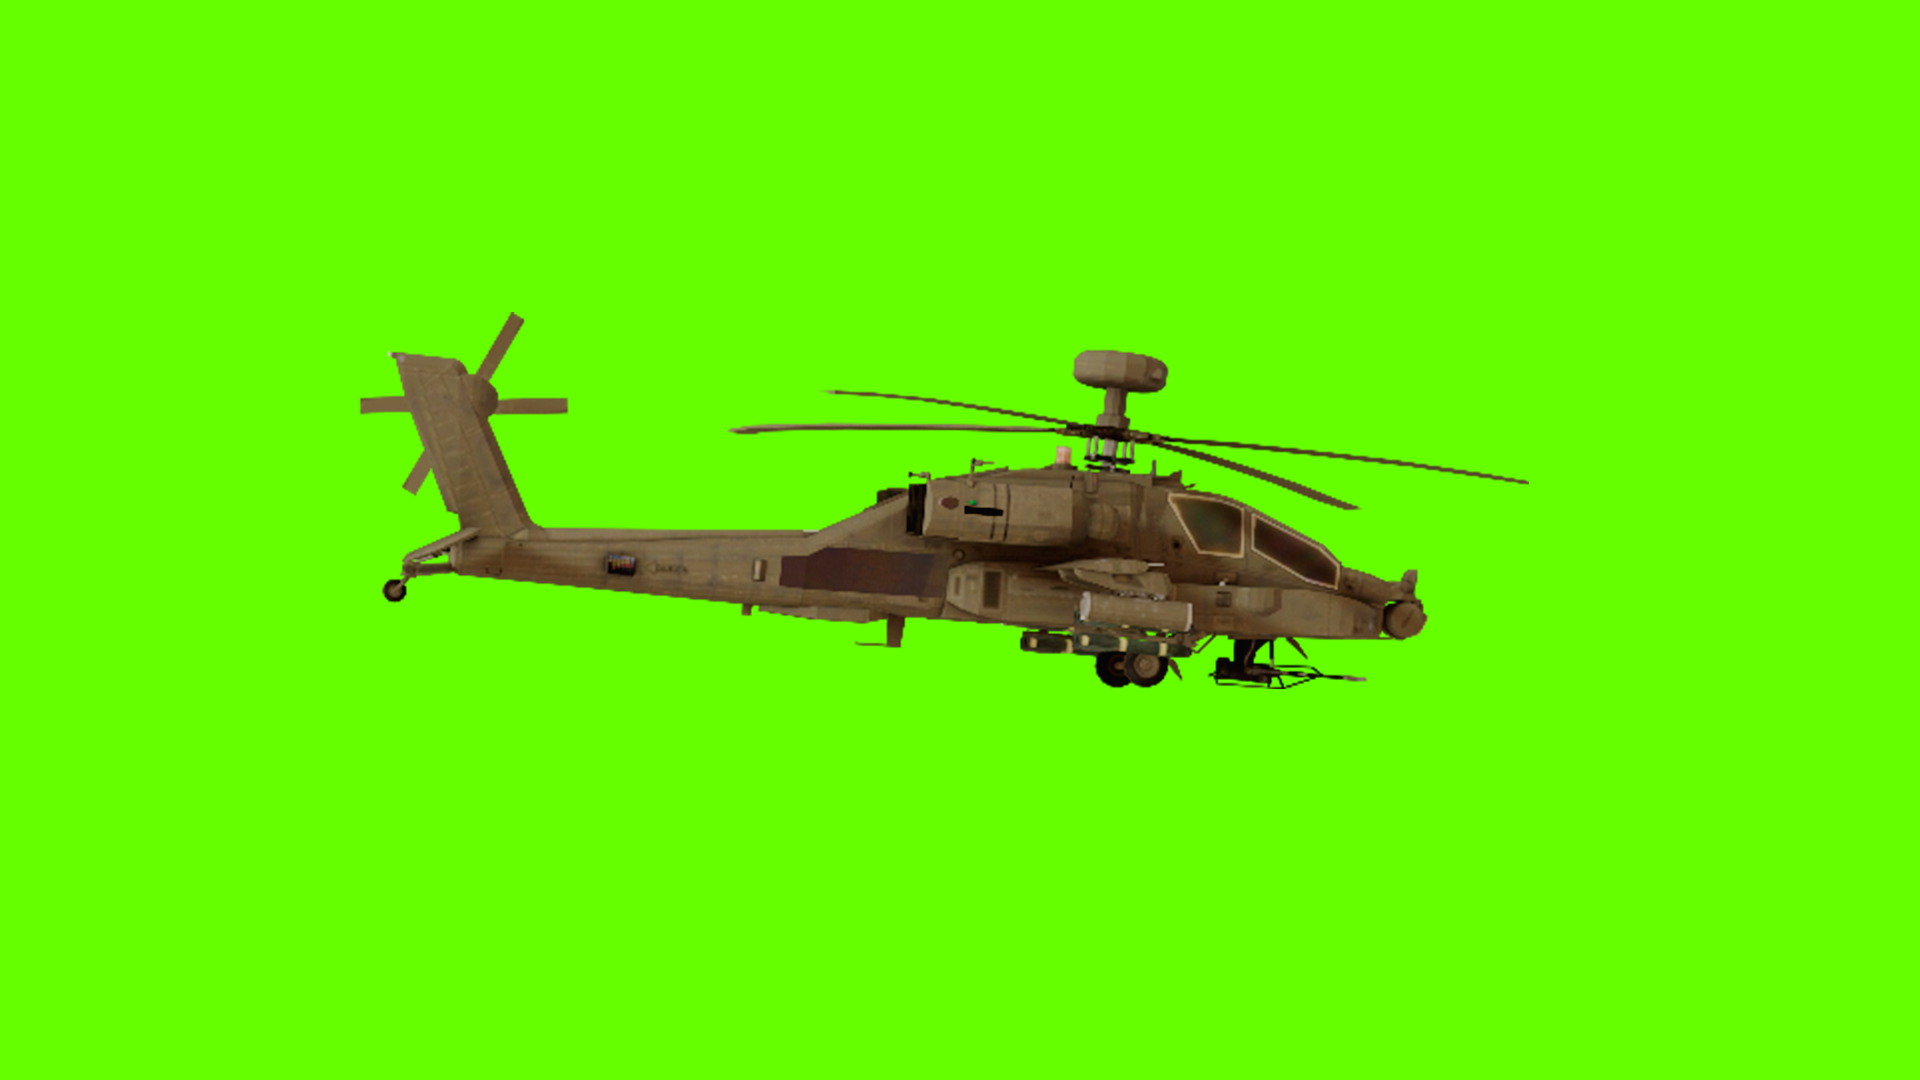 Helicopter Side 360 - Genariq